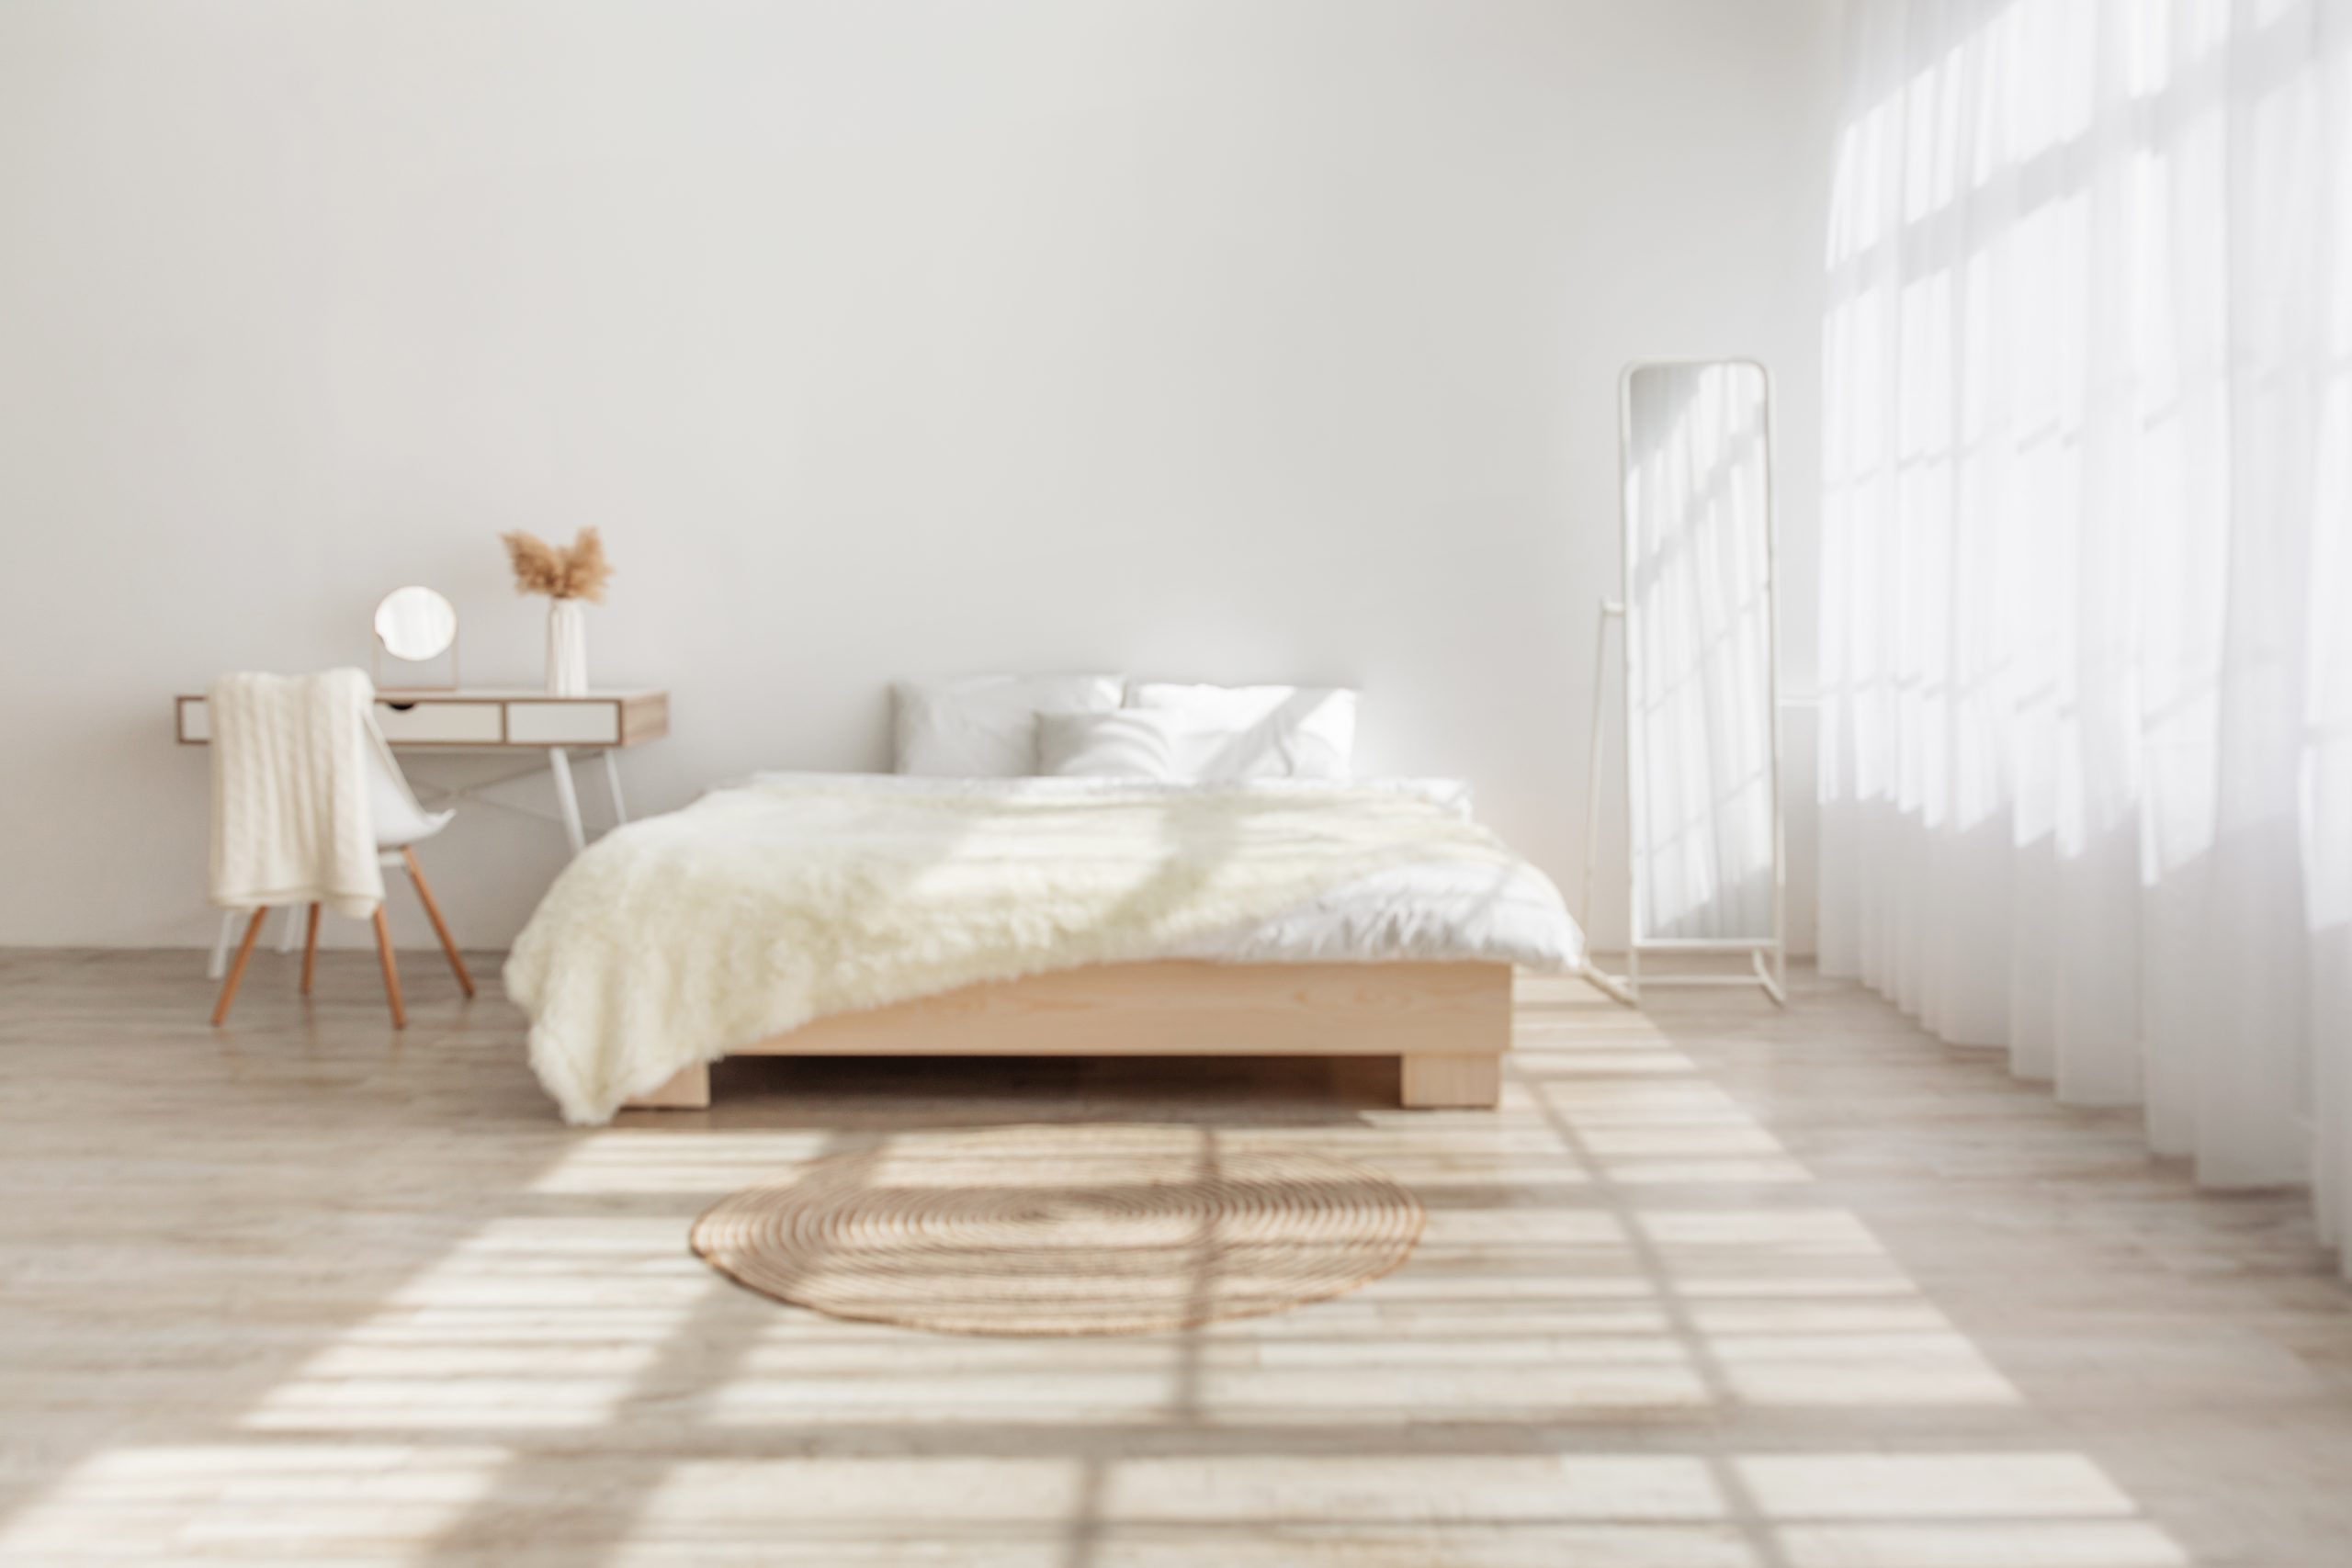 Simple Boho Home Design, Fashionable Bedroom, Sun Flare